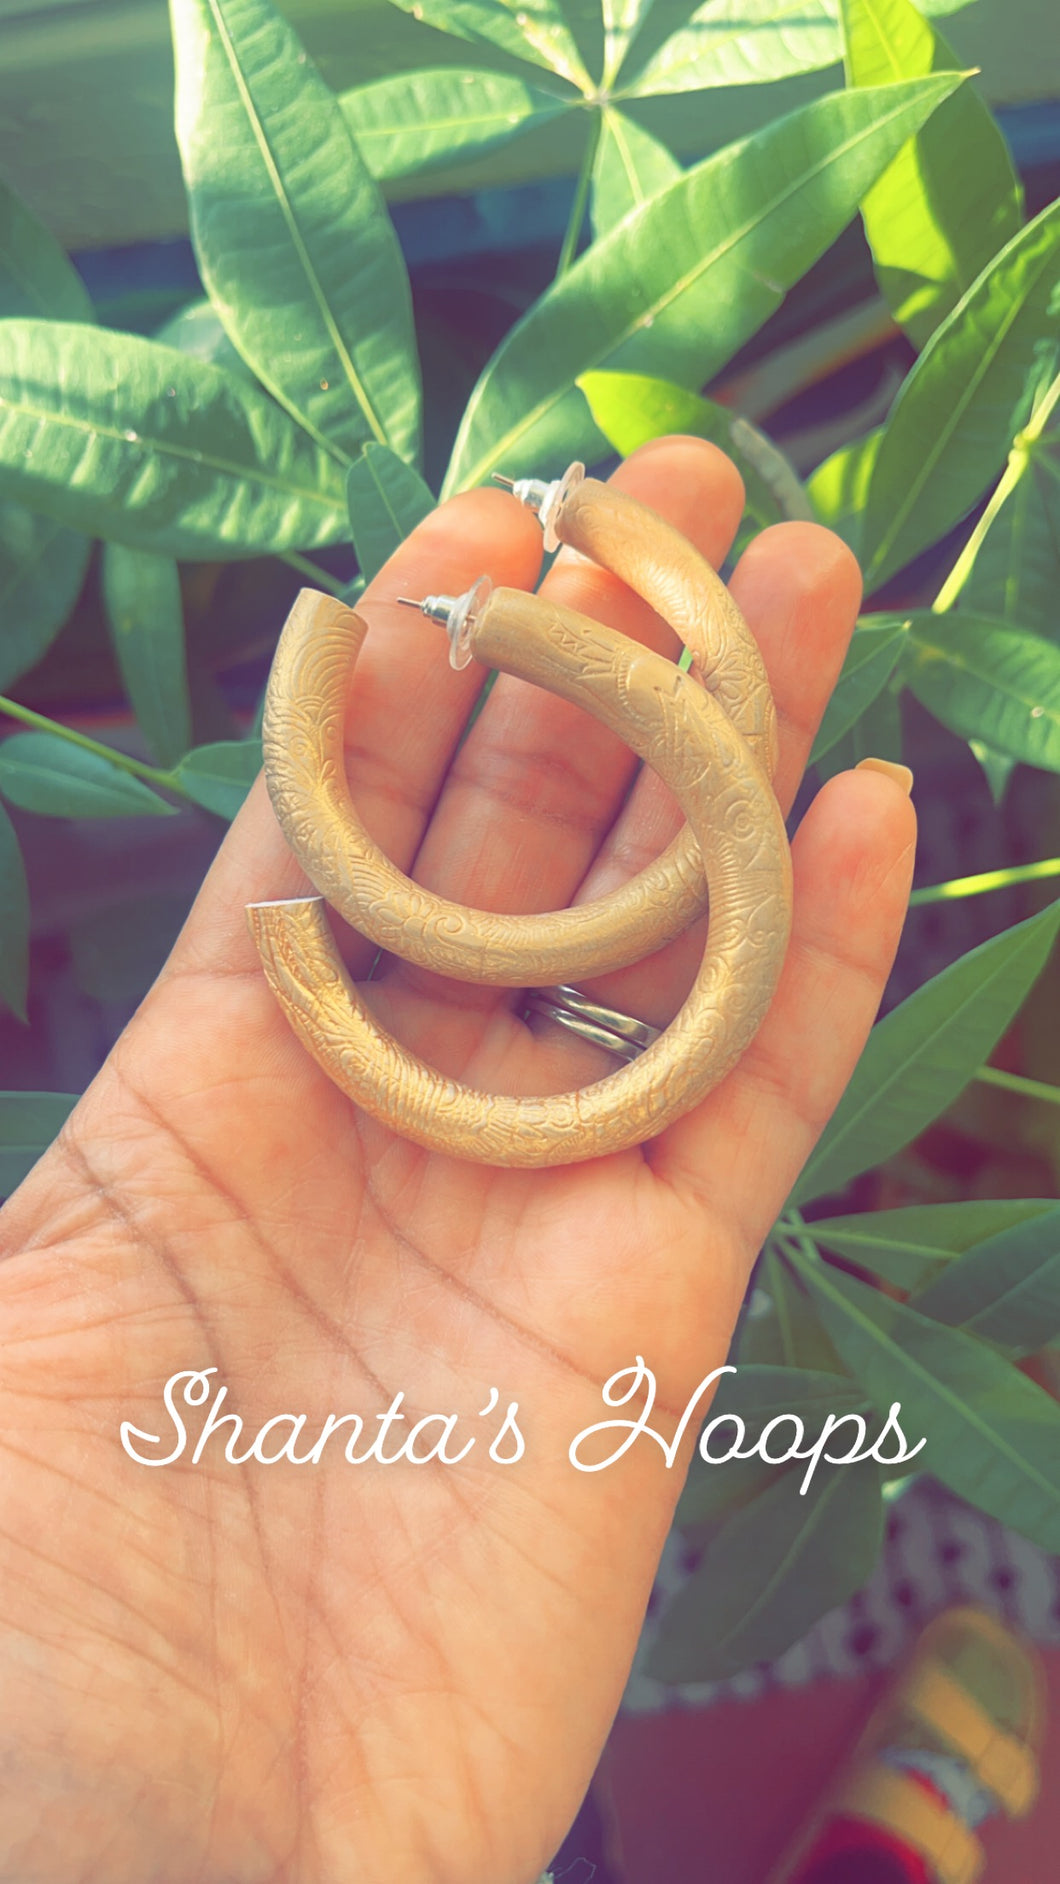 Shanta’s Hoops